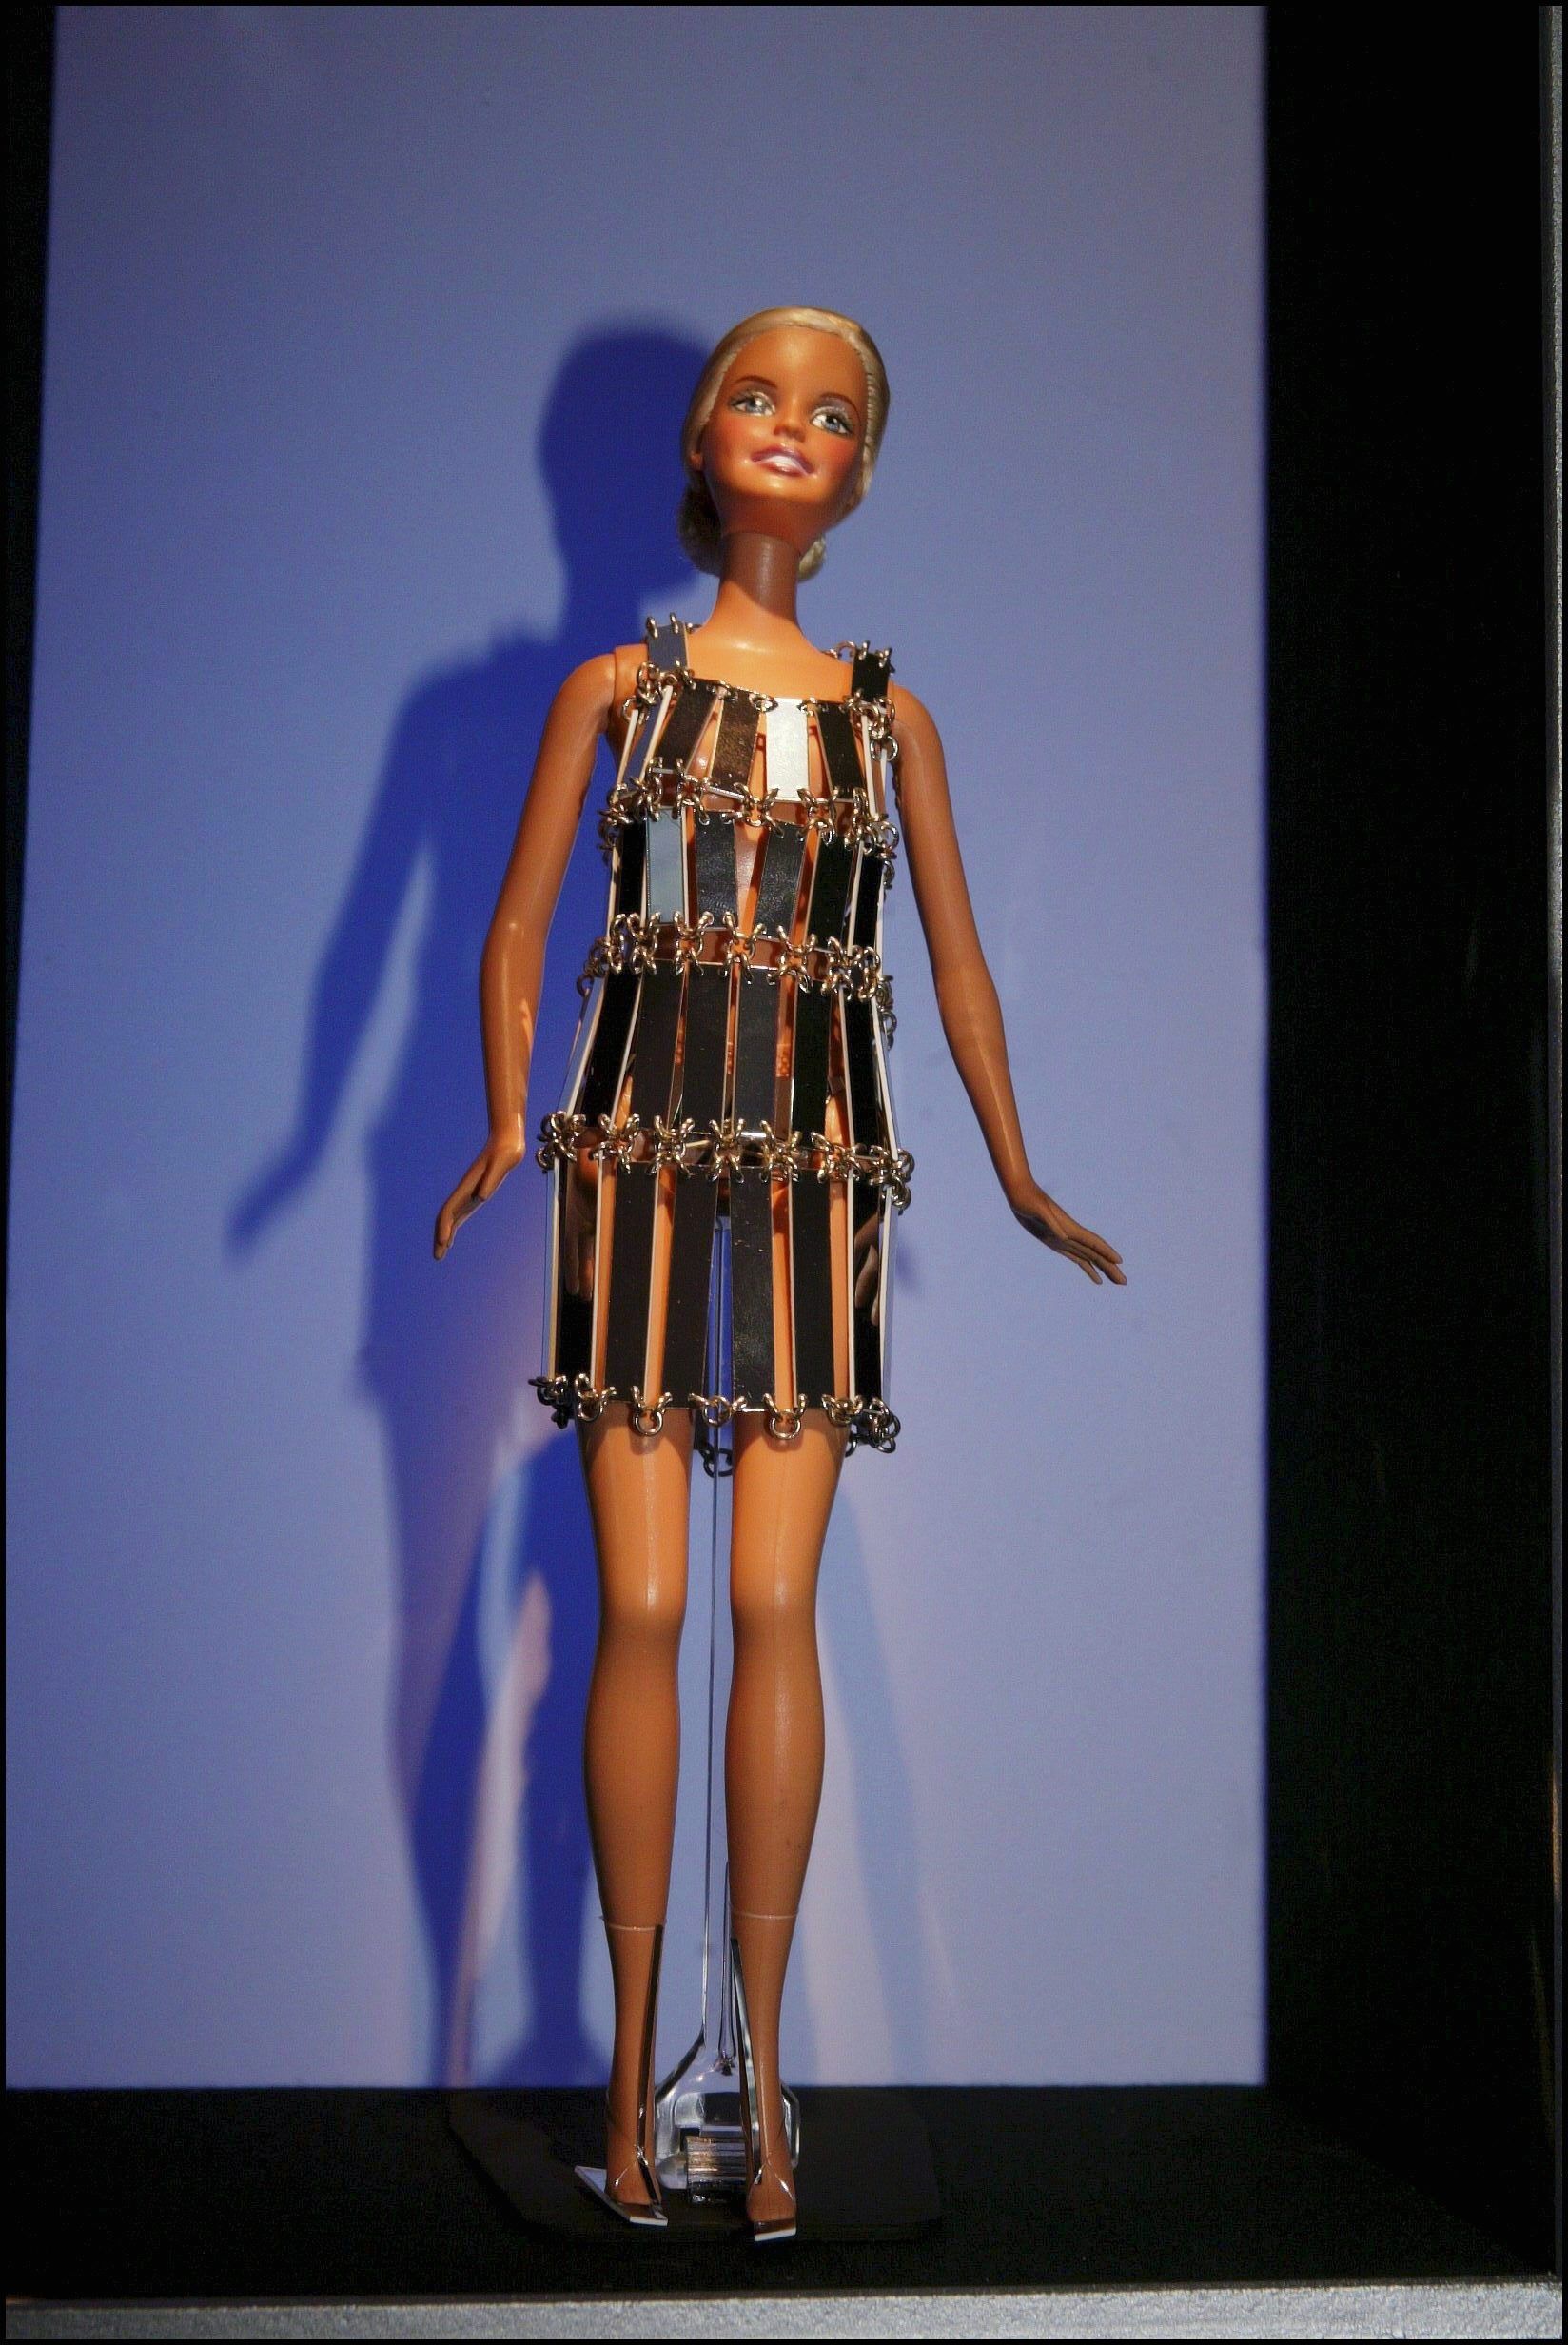 barbie dress model